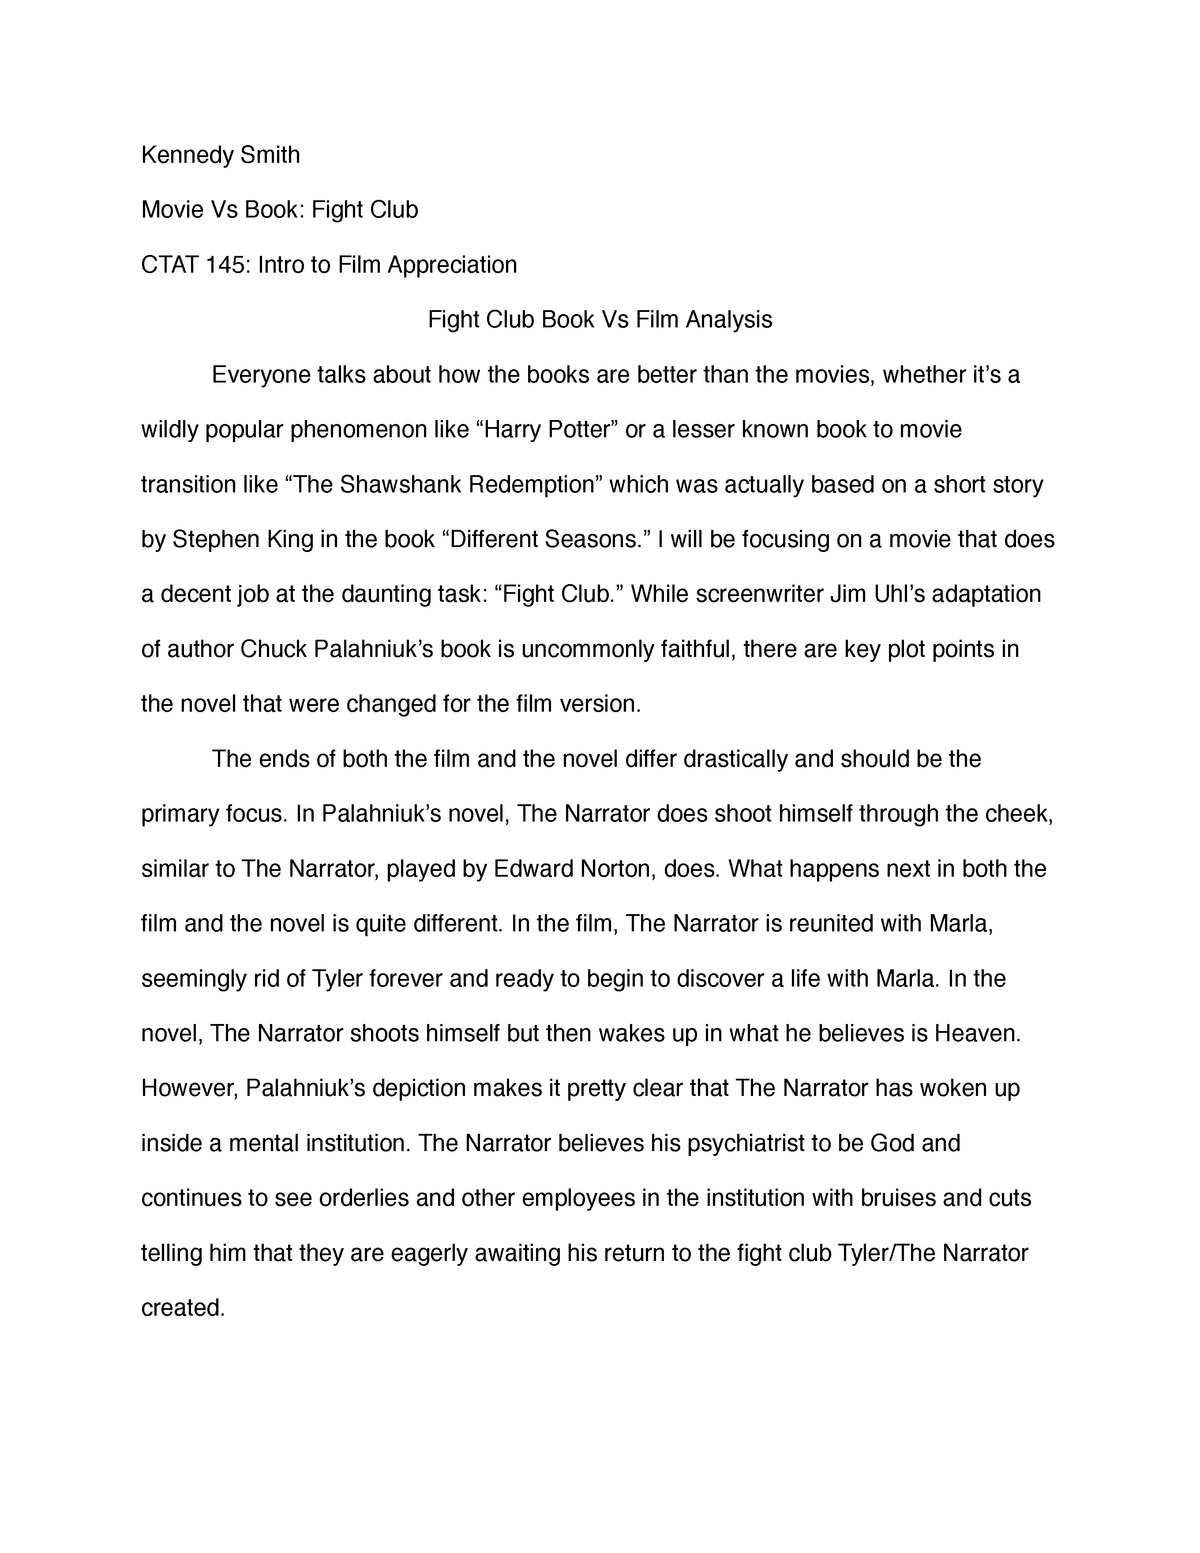 fight club book analysis essay